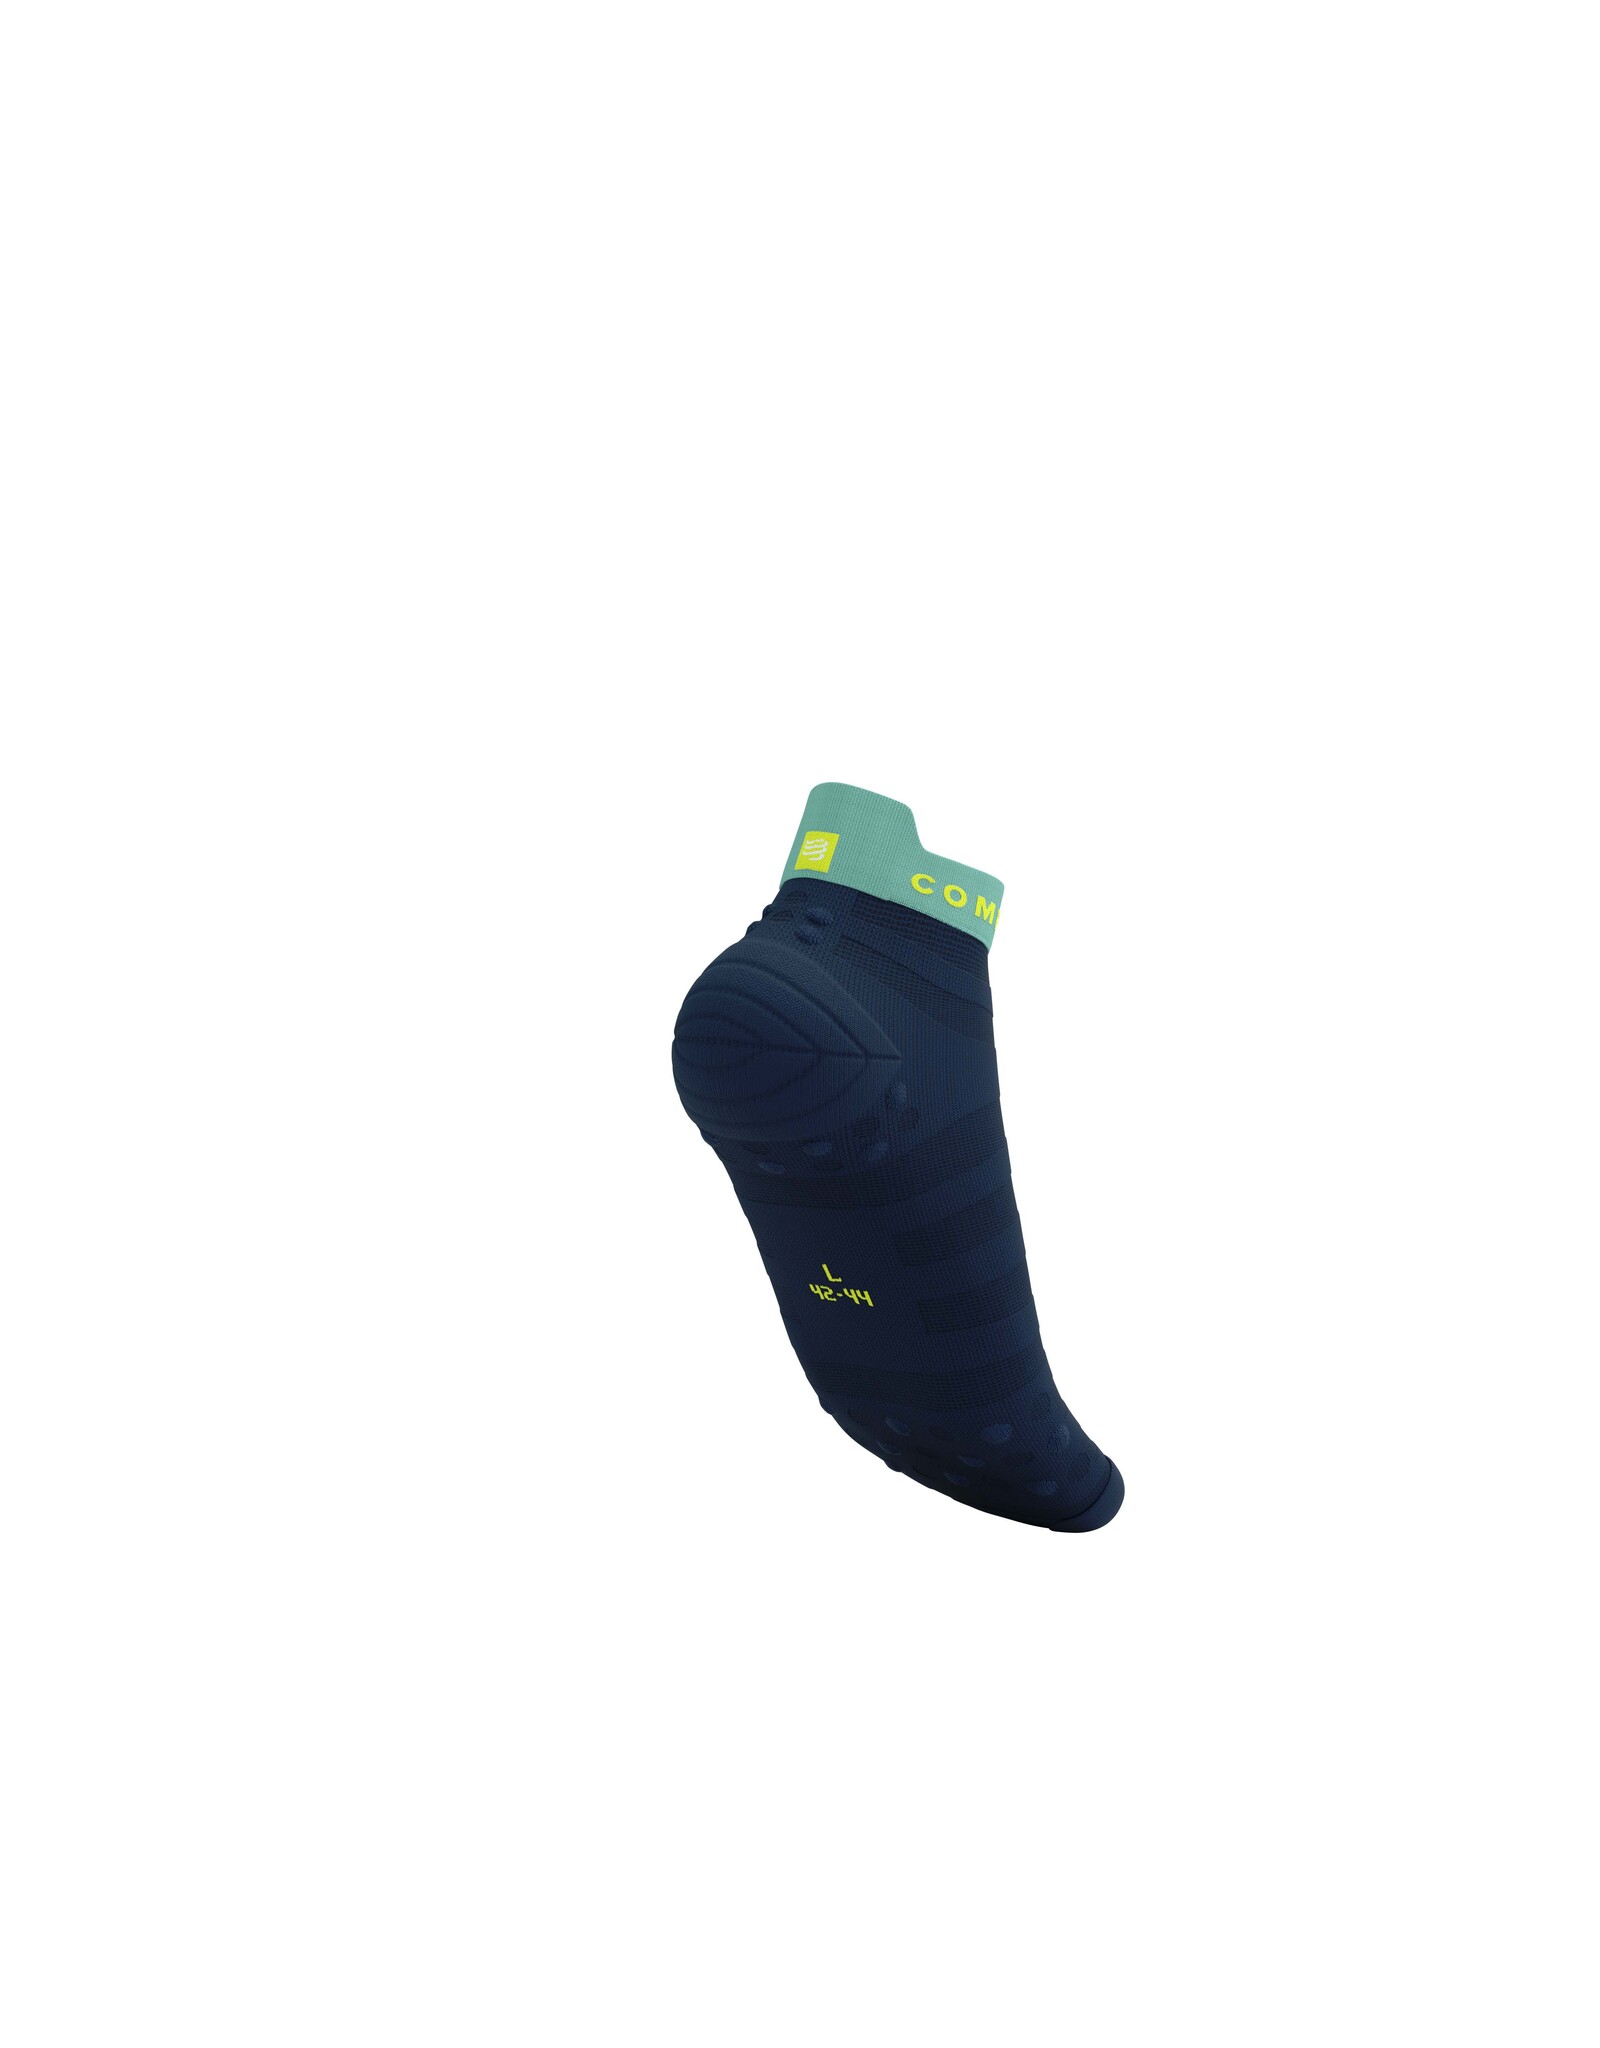 Compressport Pro Racing Socks v4.0 Ultralight Run Low - Dress Blues/Eggshell Blue/Green Sheen